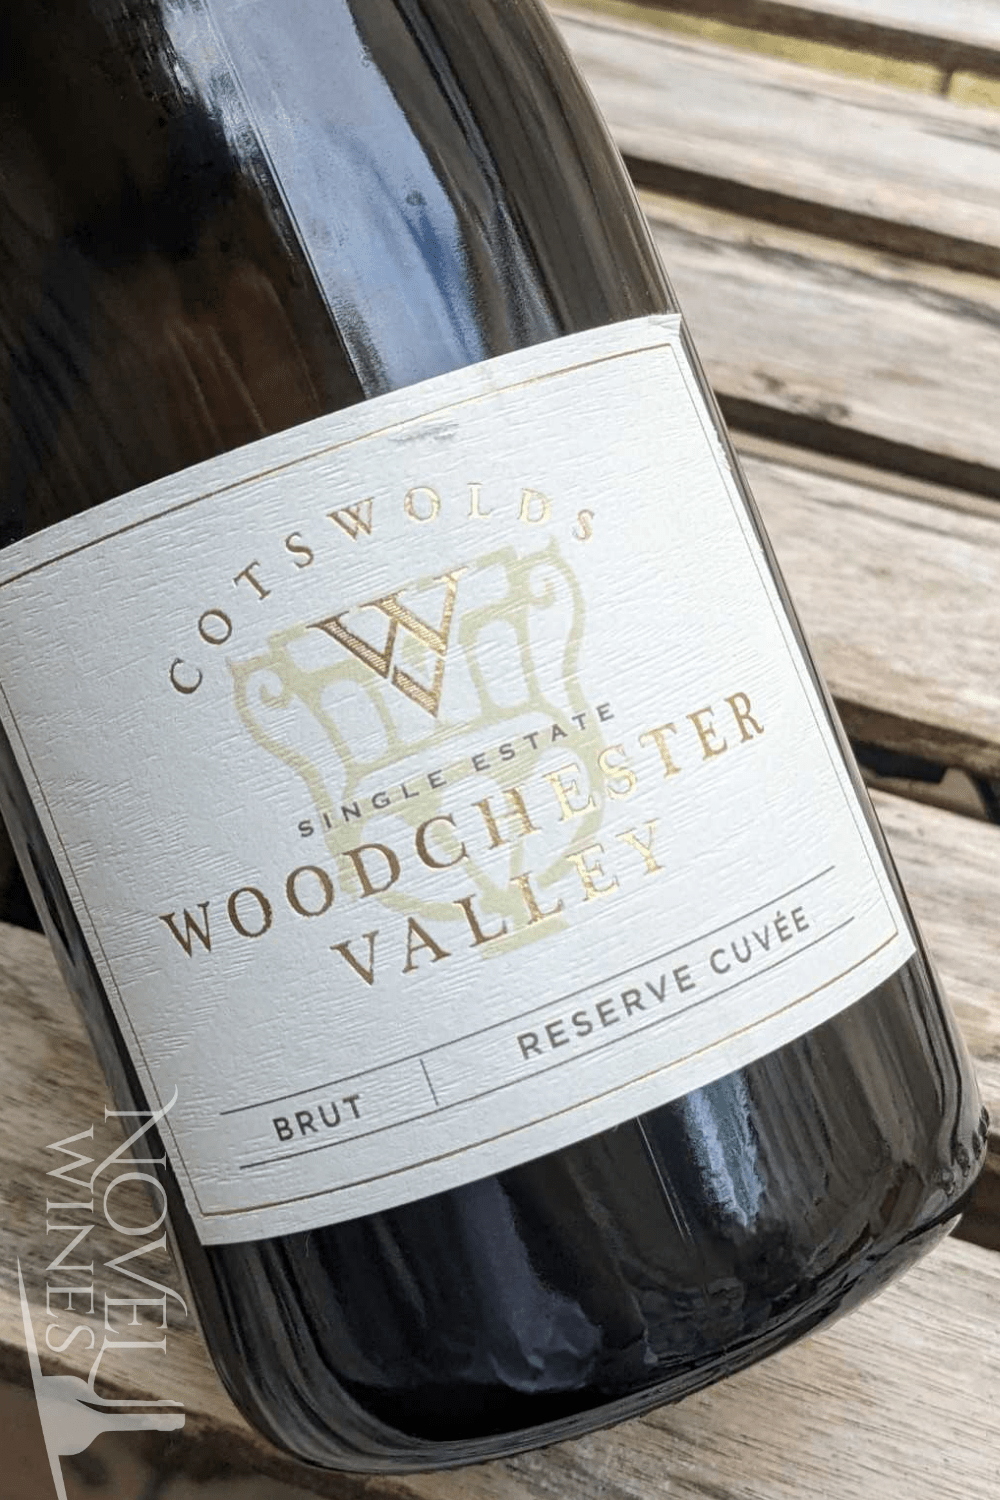 Woodchester Valley Vineyard Sparkling Wine Woodchester Valley Vineyard Cotswolds Reserve Cuvée NV, England